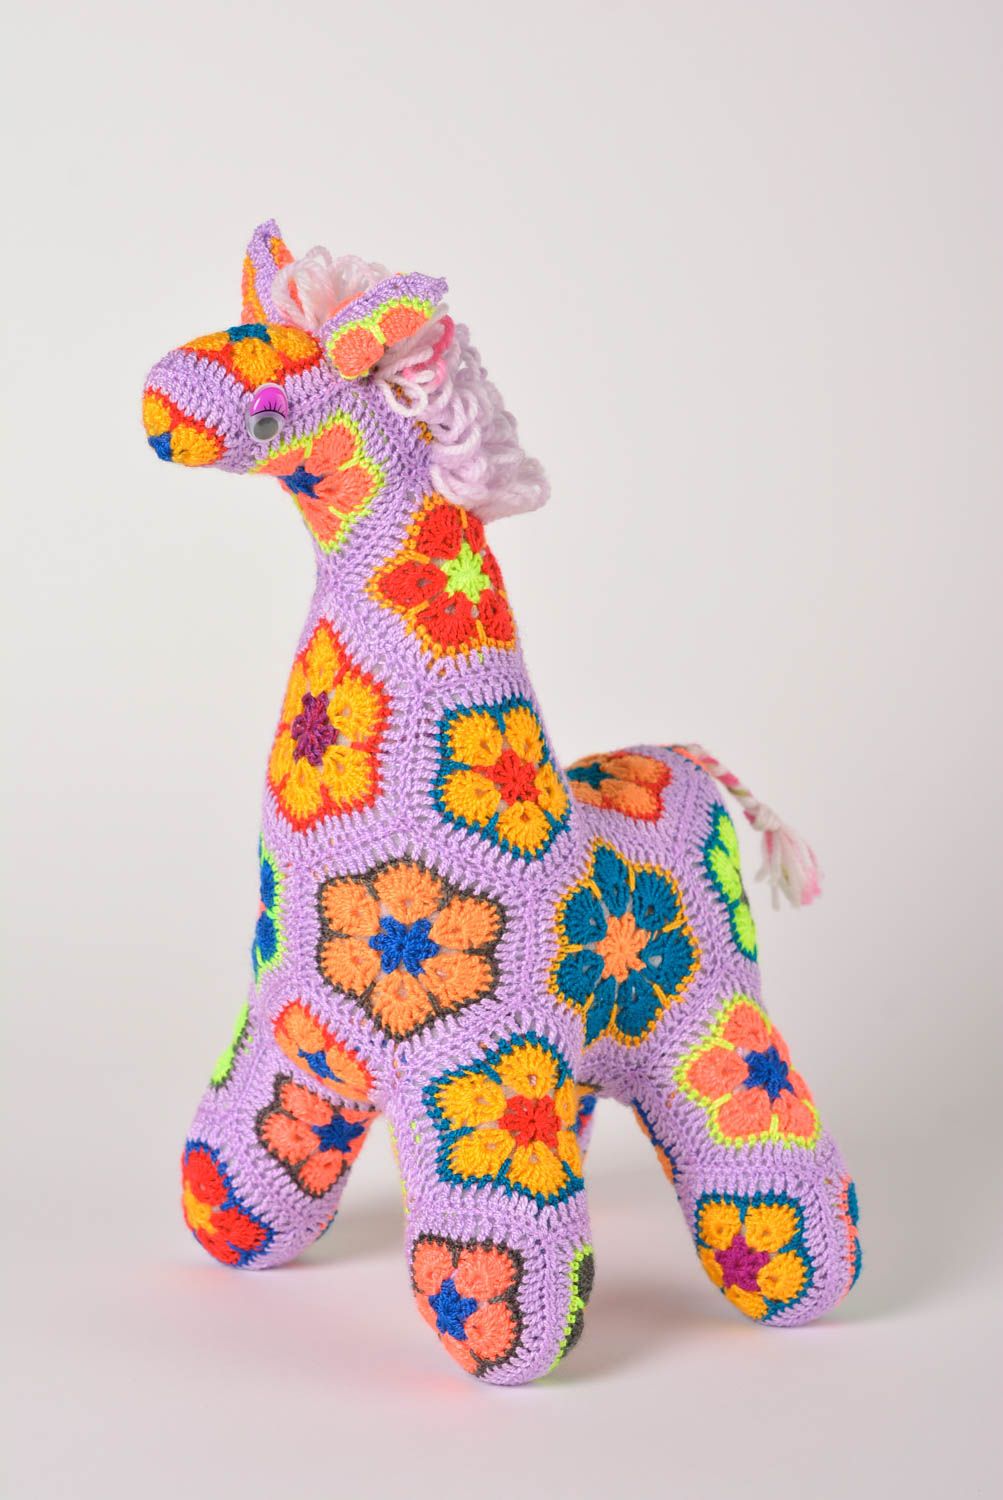 Unusual handmade crochet toy stuffed soft toy nursery design gifts for kids photo 1